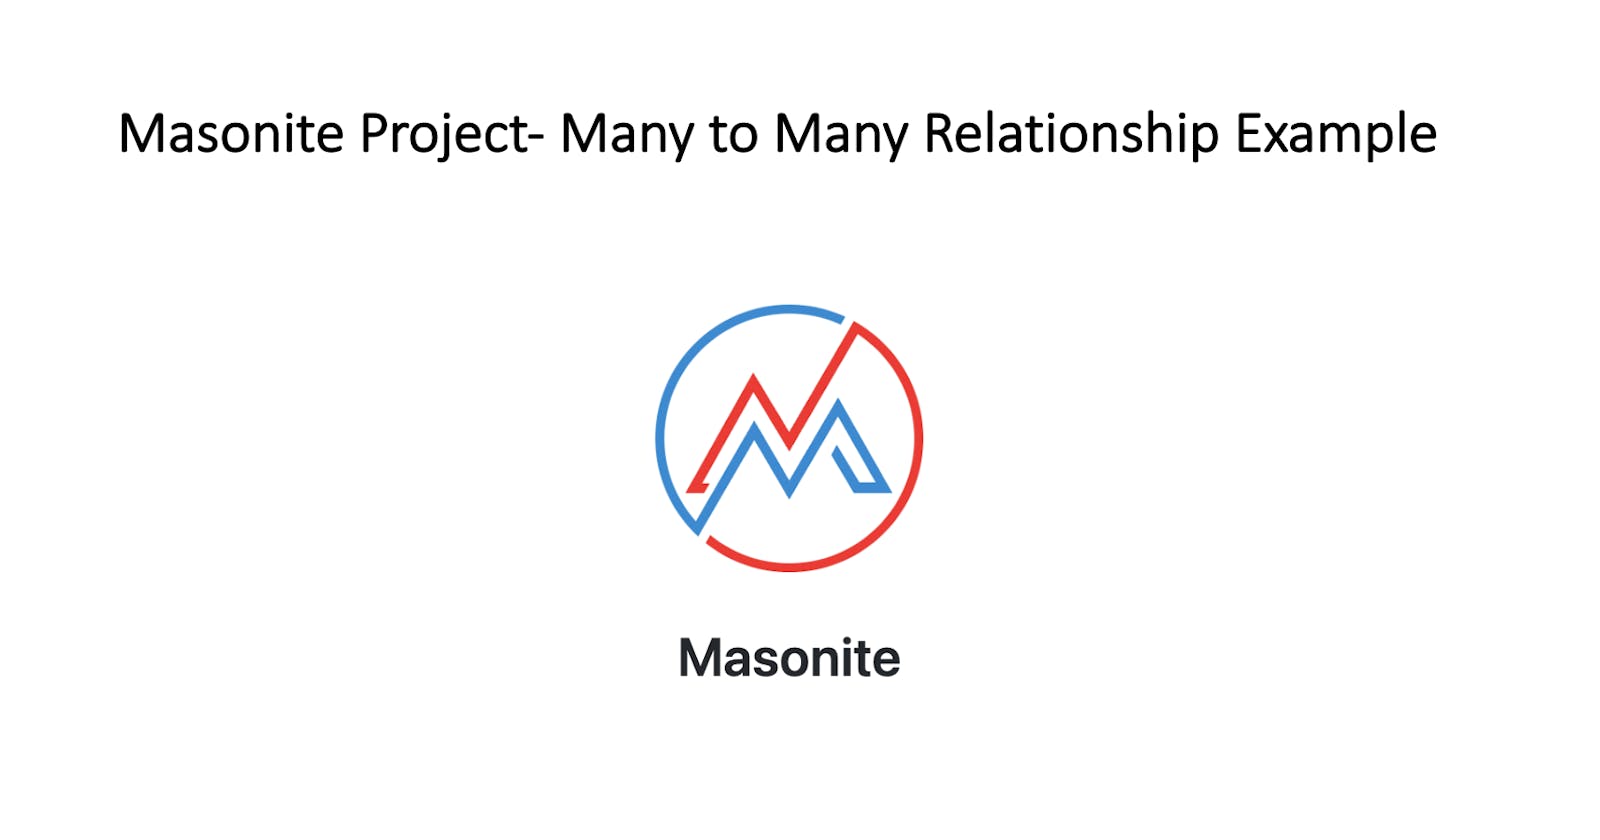 Masonite Project - Many to Many Relationship Example